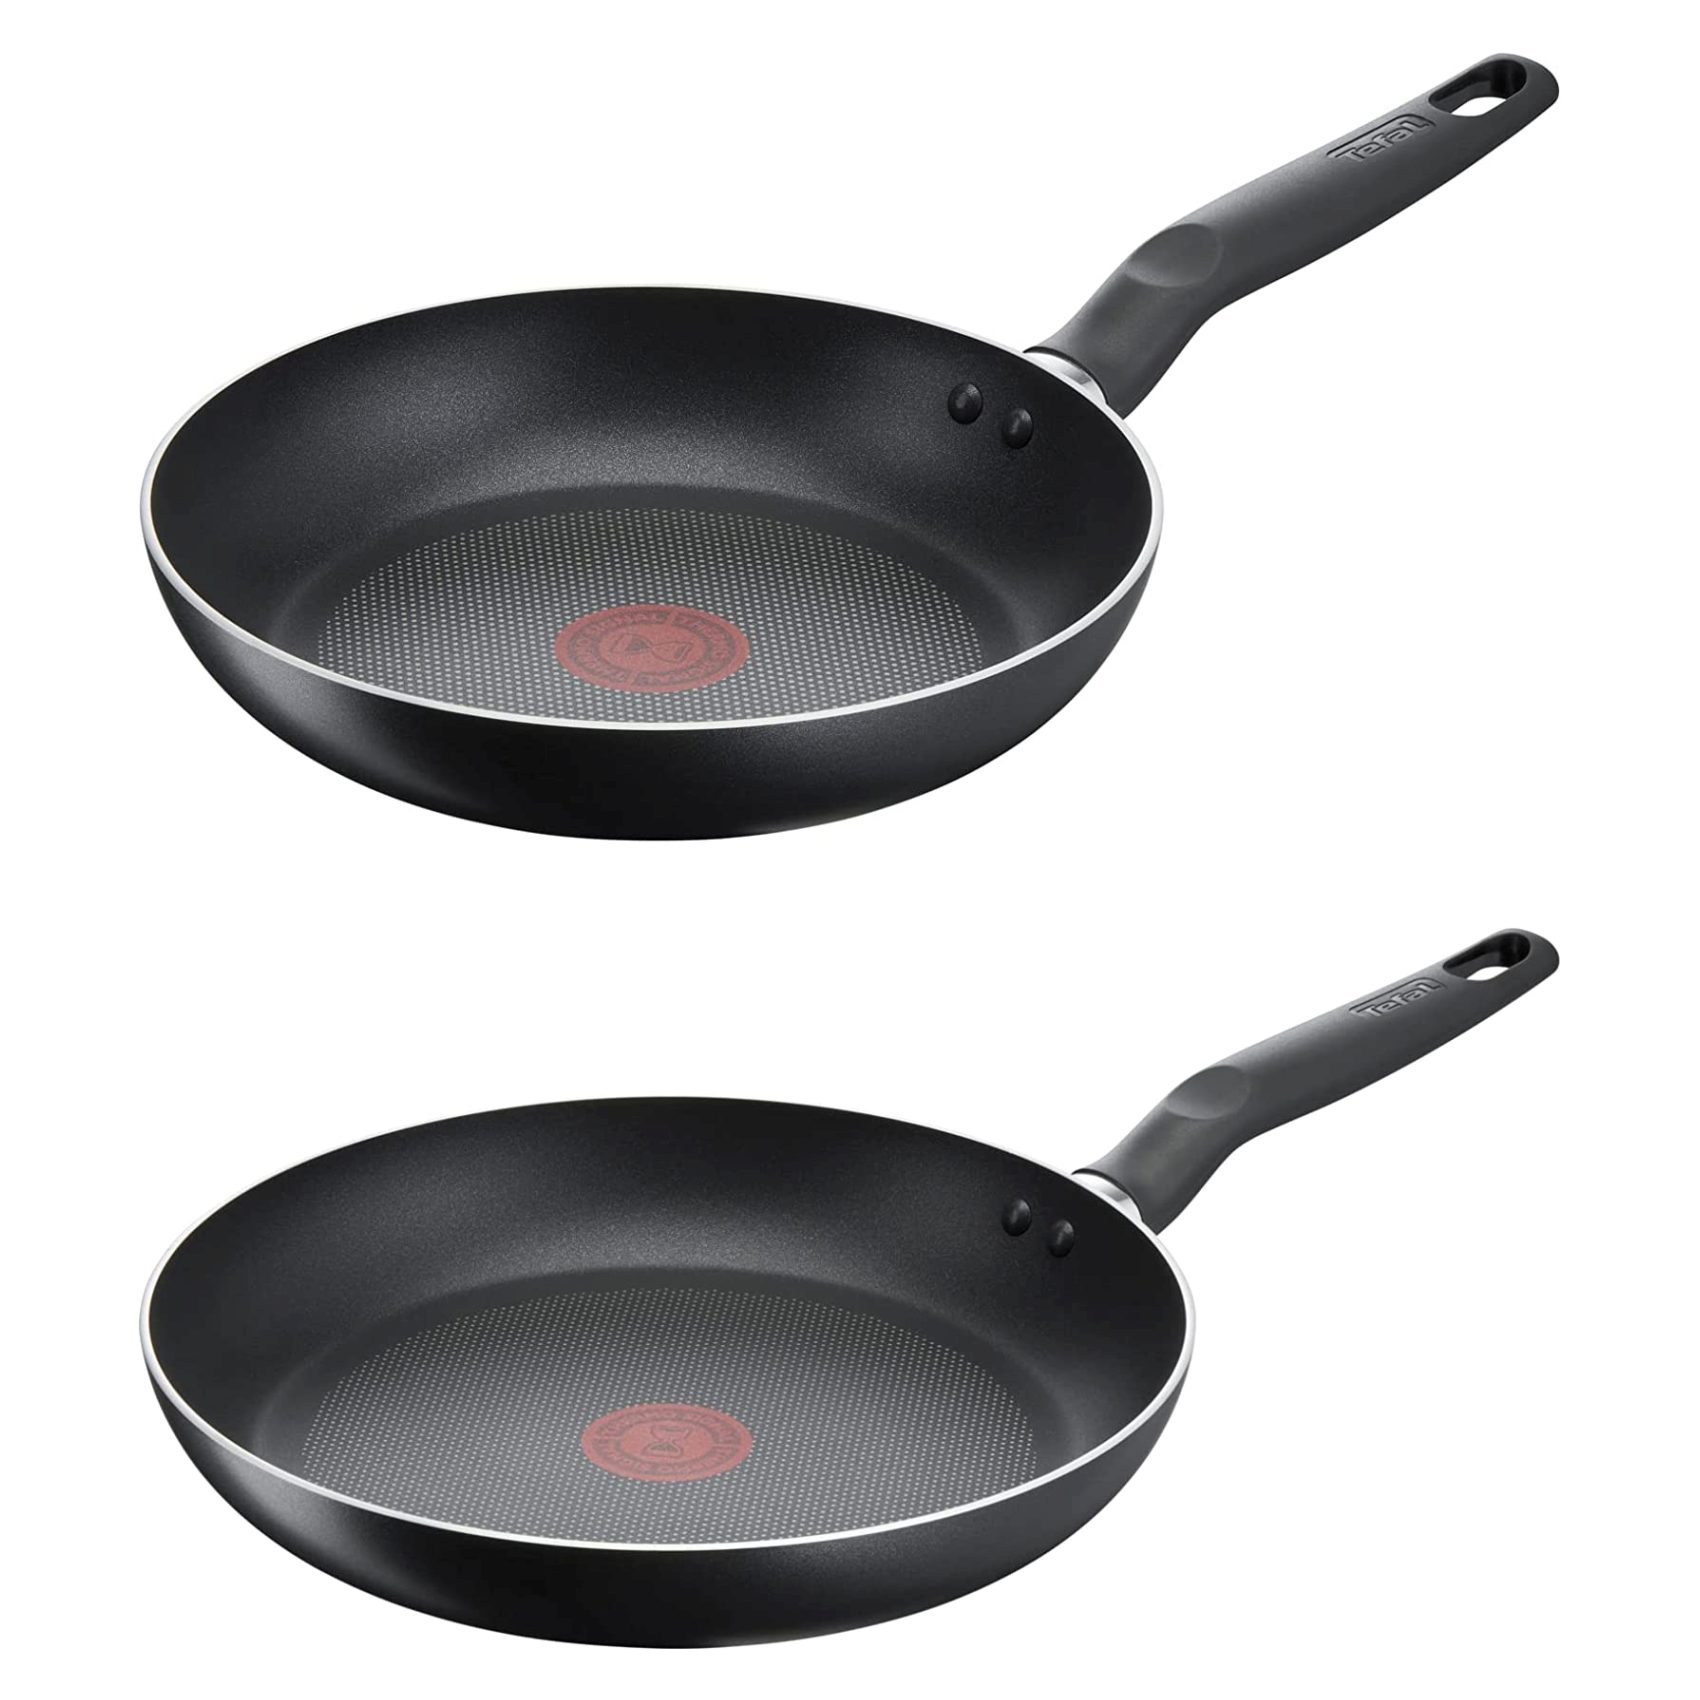 Tefal G6 Super Cook Frying Pan Black 28cm And 24cm 2 PCS